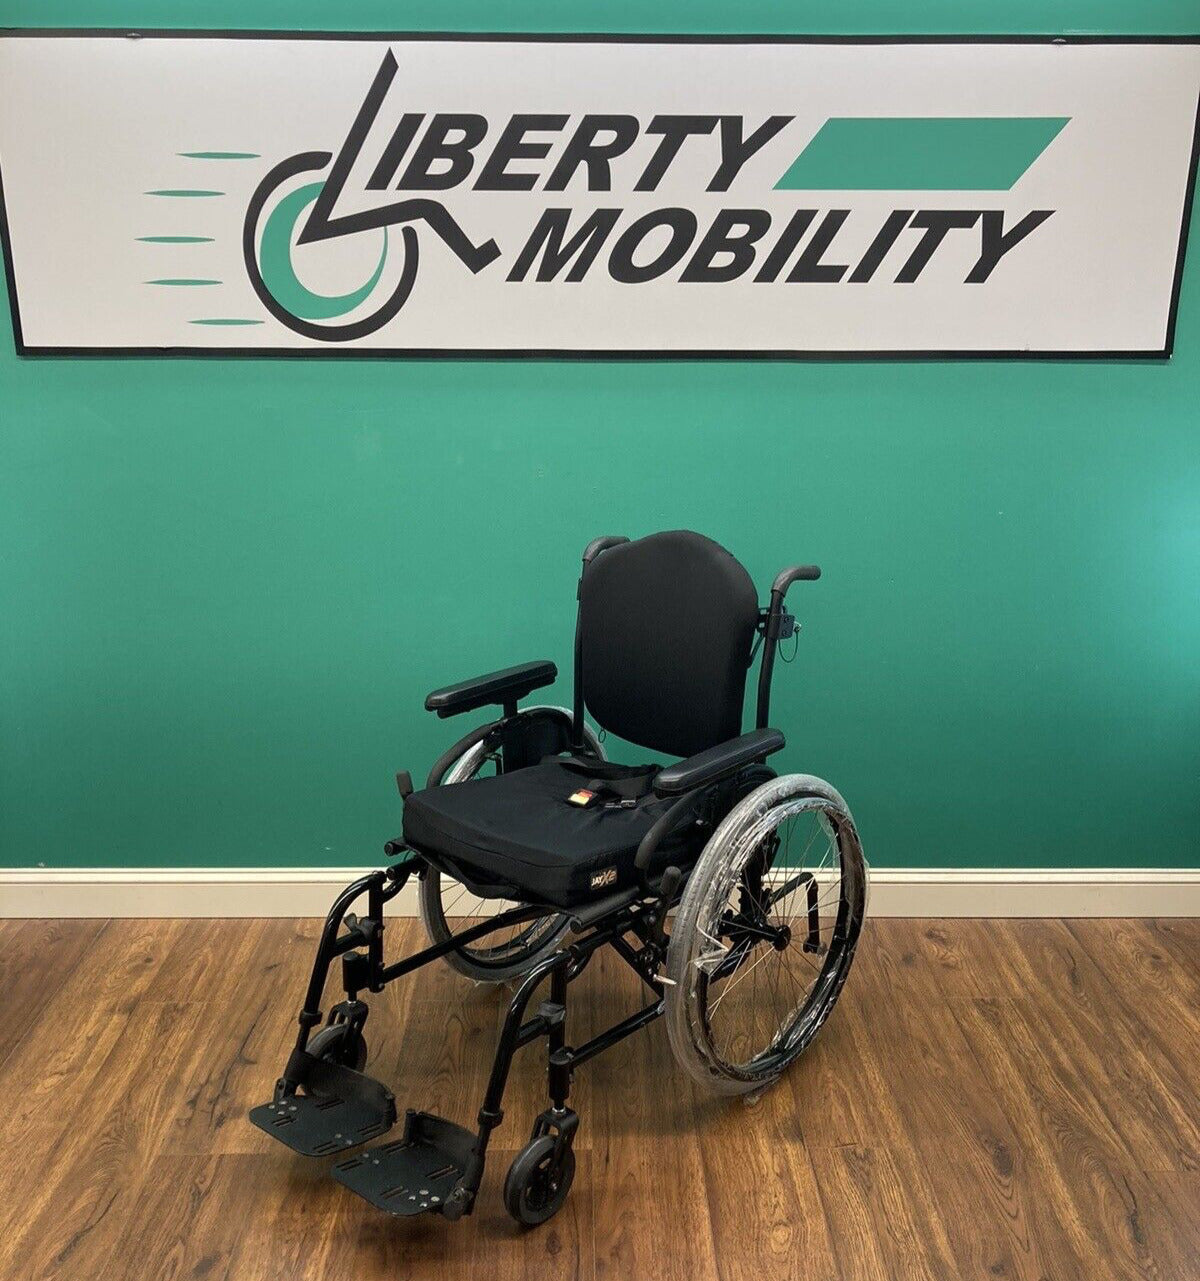 2020 Quickie 2 Manual Wheelchair w/ Air Filled Wheels -Seat: 19" x 20" #7549